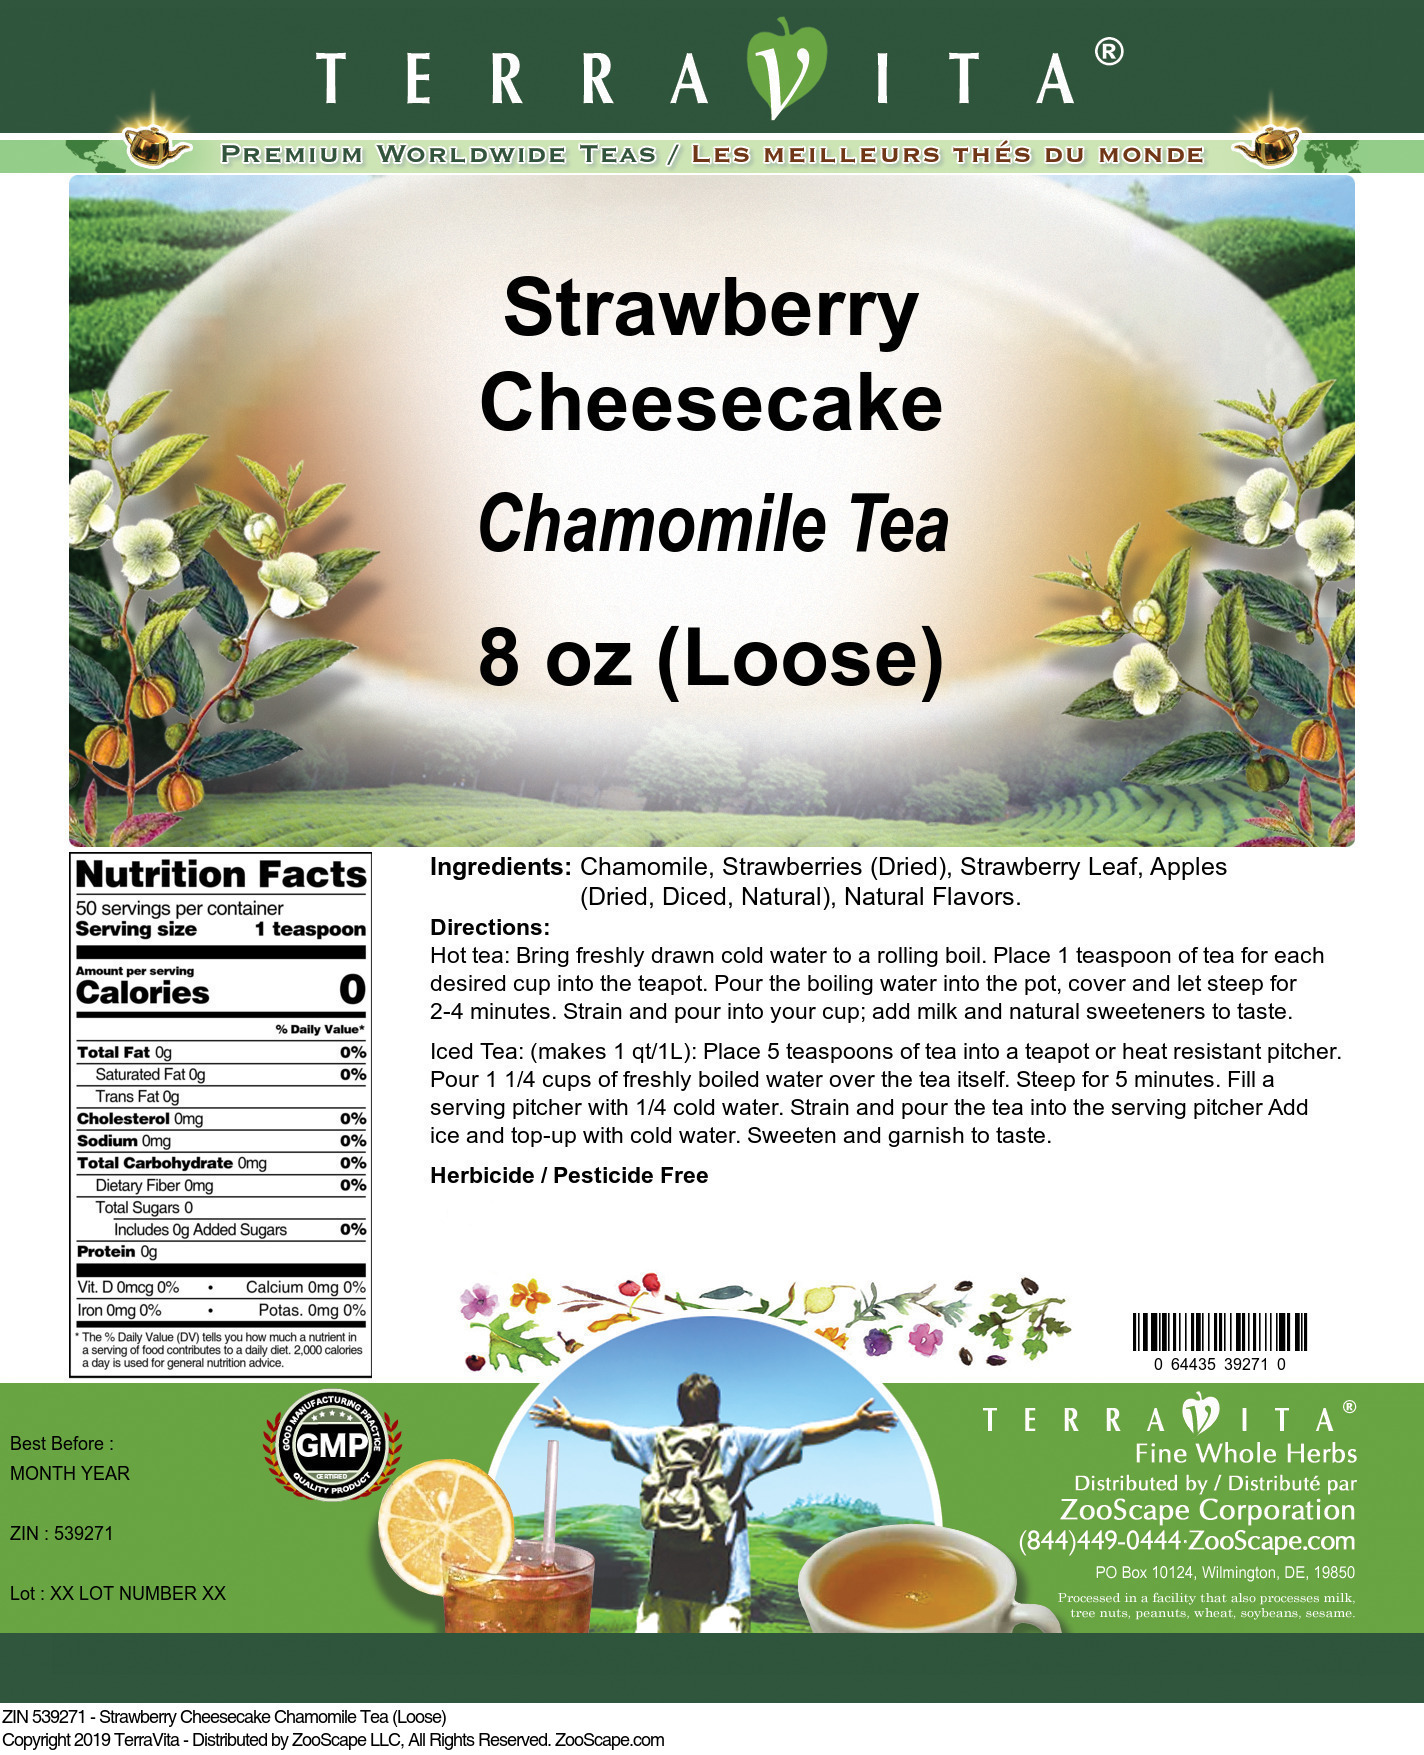 Strawberry Cheesecake Chamomile Tea (Loose) - Label